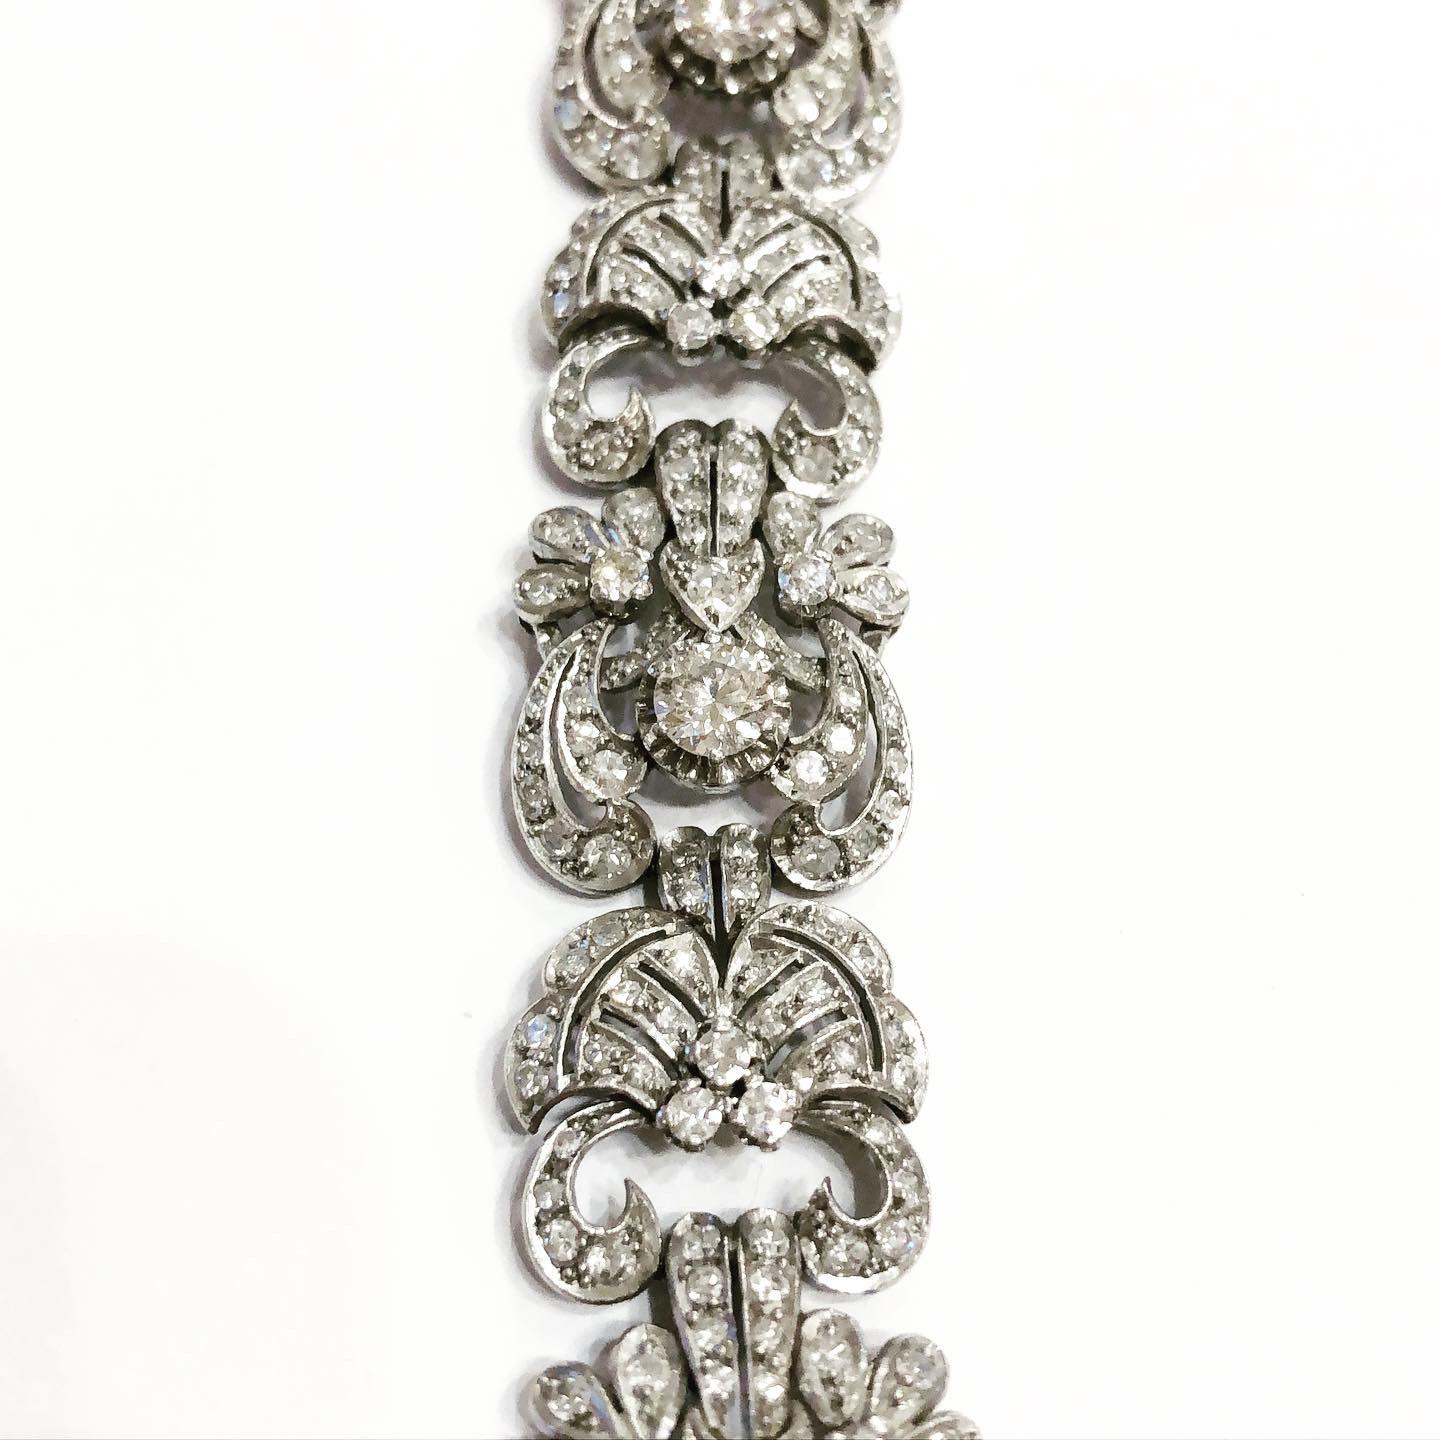 Smart Art Deco diamonds and platinum bracelet.
France, circa 1930. Condition:Good.
Brilliant cut  and old European cut diamonds 
Total approximate diamond carat weight:: 8.7 carat: Central stones 2,2 carats + others 6,5 carats.
Length: 17.3 cm 